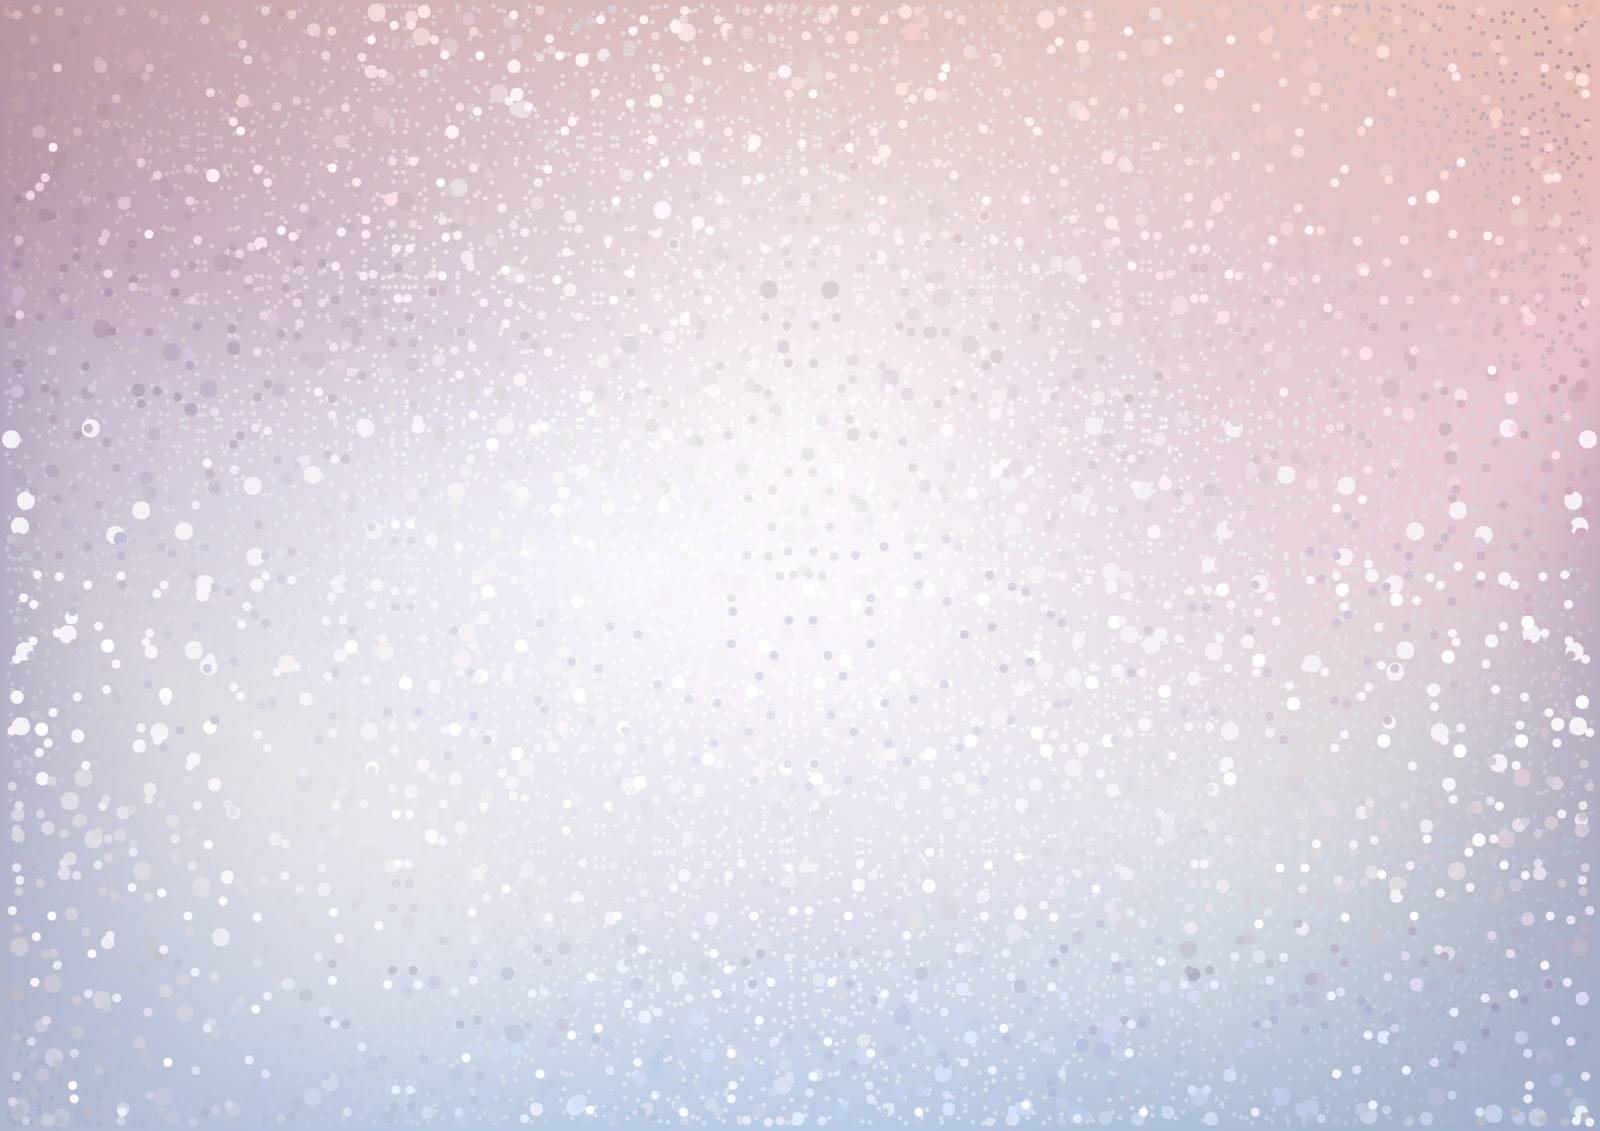 Defocused Glitter Lights Background - Abstract Illustration, Vector